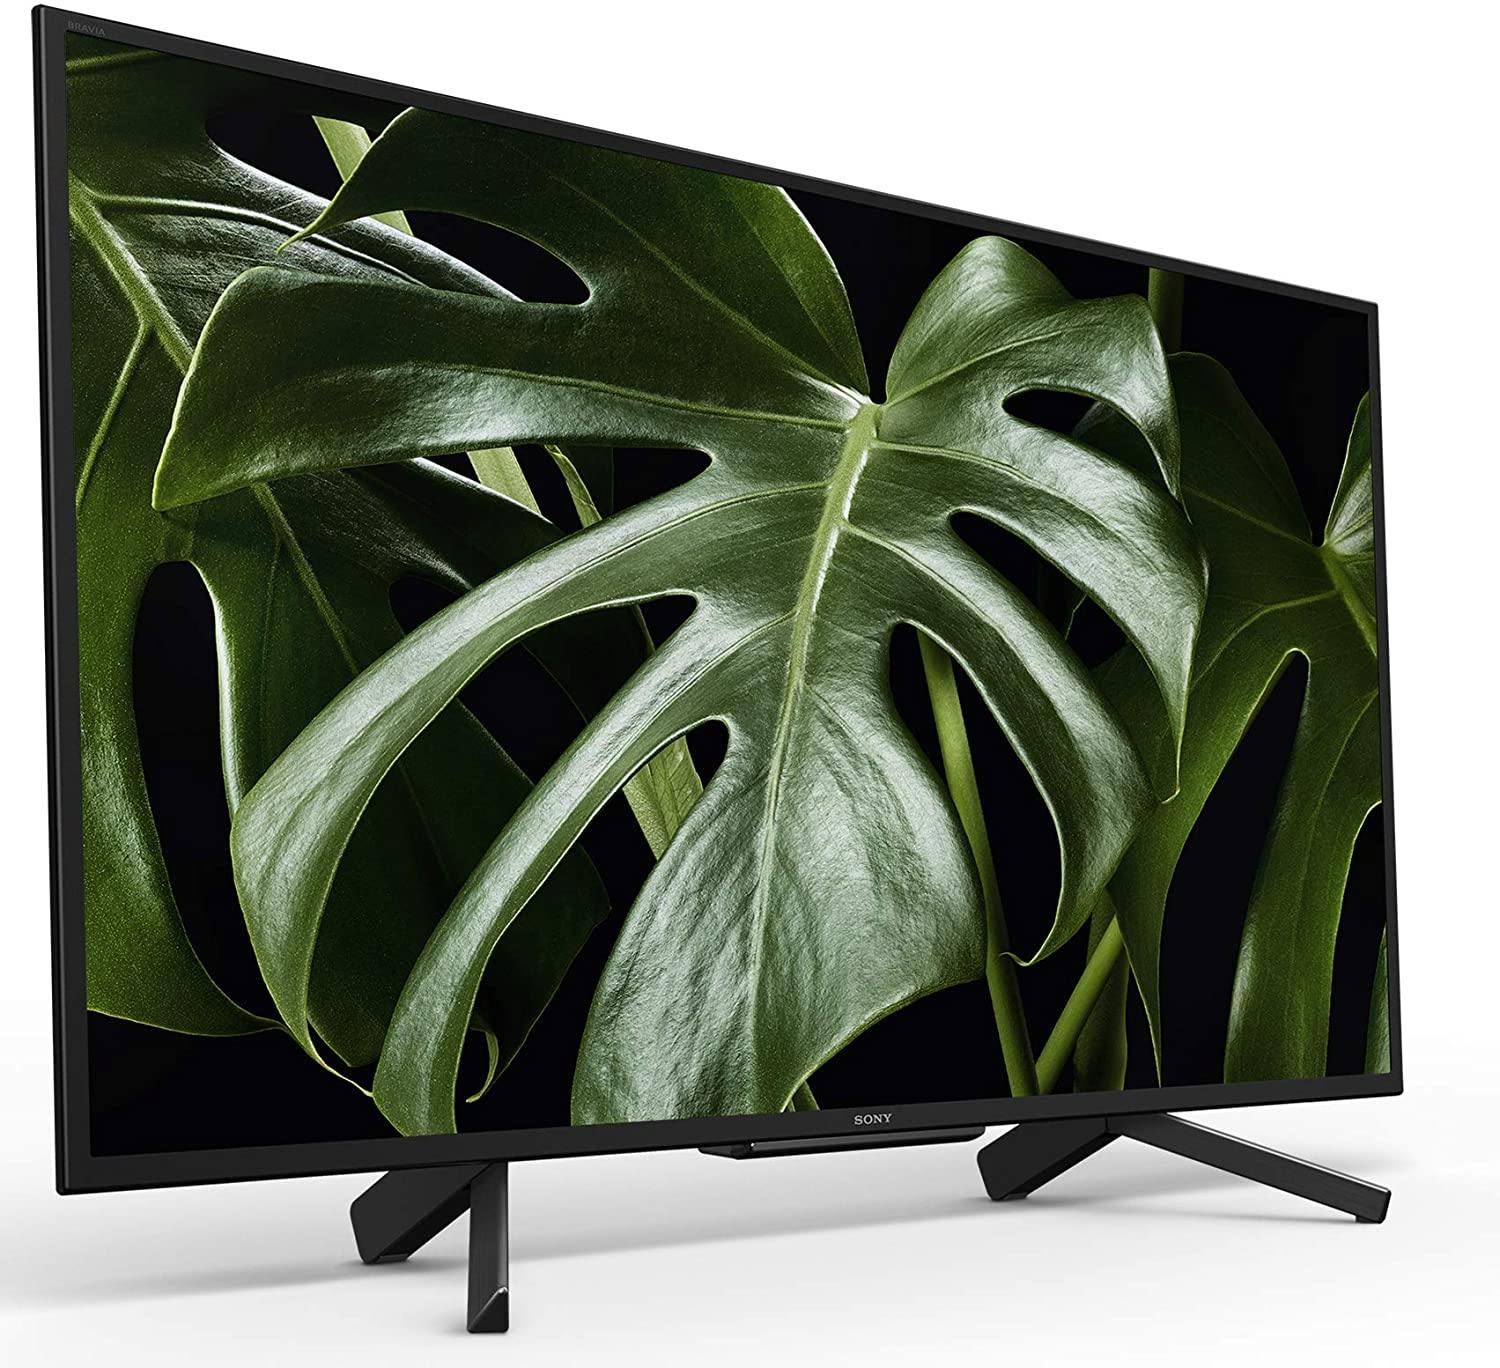 Sony Bravia 125.7 cm (50 inches) Full HD LED Smart TV KLV-50W672G (Black) (2019 Model) - Mahajan Electronics Online